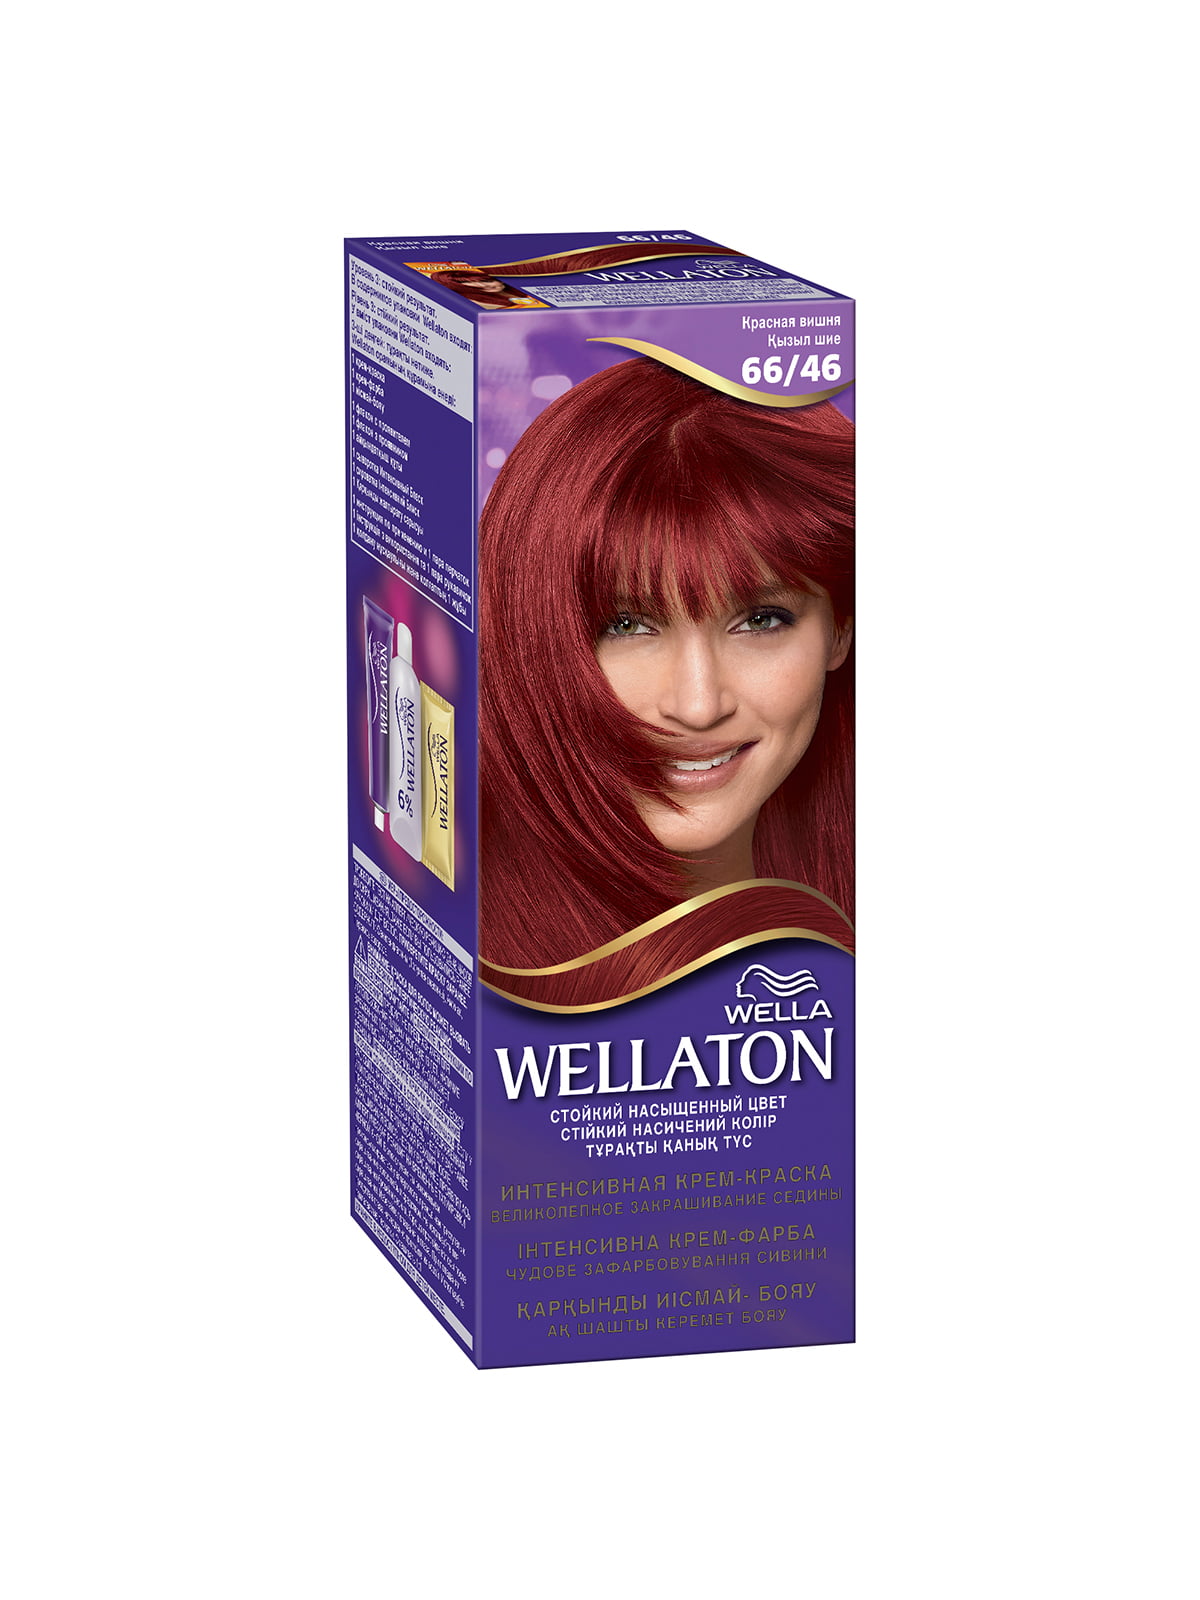 Веллатон 66/46 красная вишня краска для волос